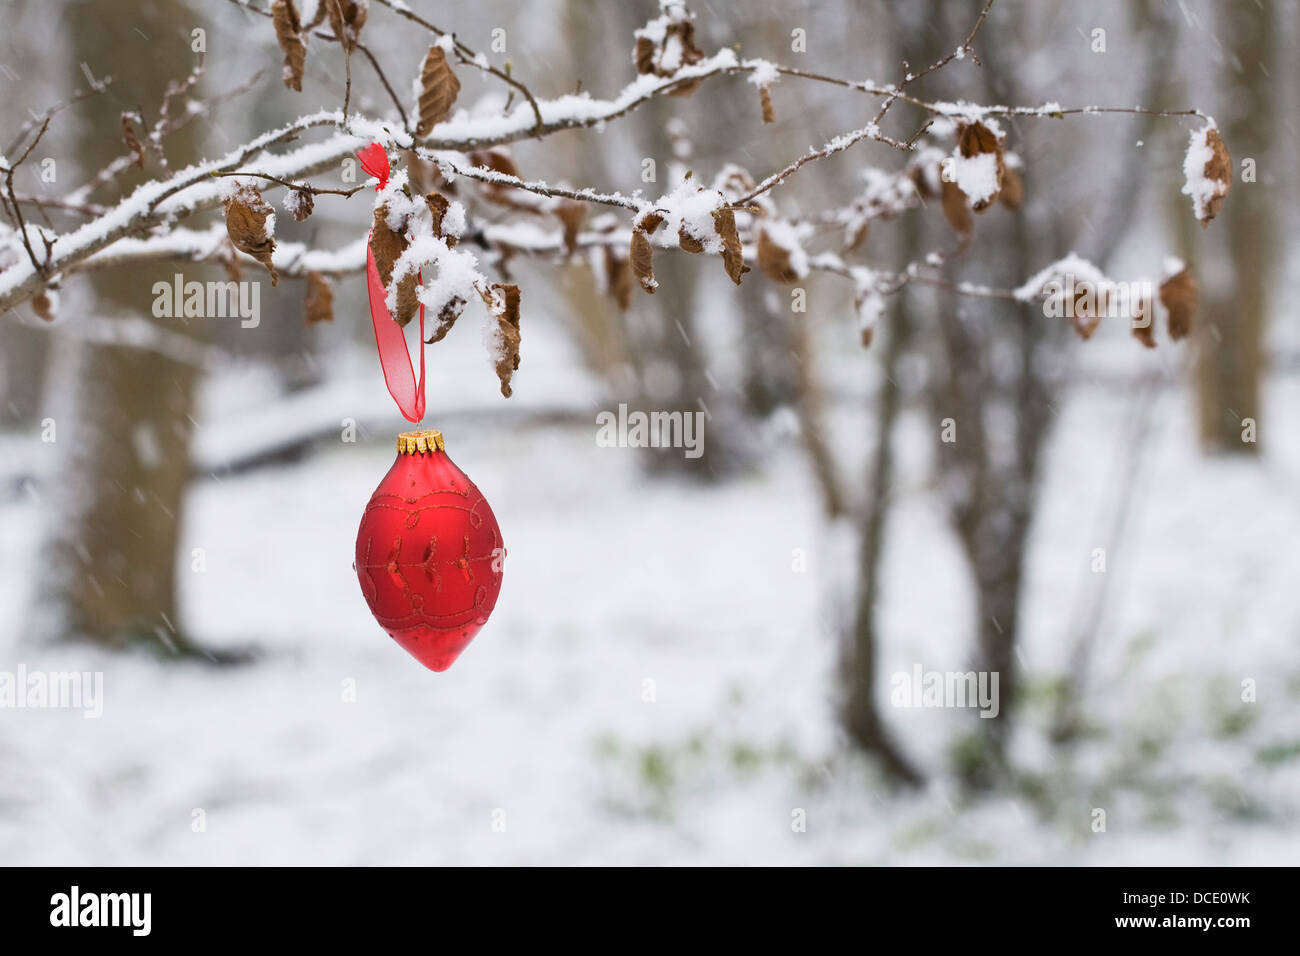 Una singola pallina rossa appeso a una coperta di neve di legno. Foto Stock